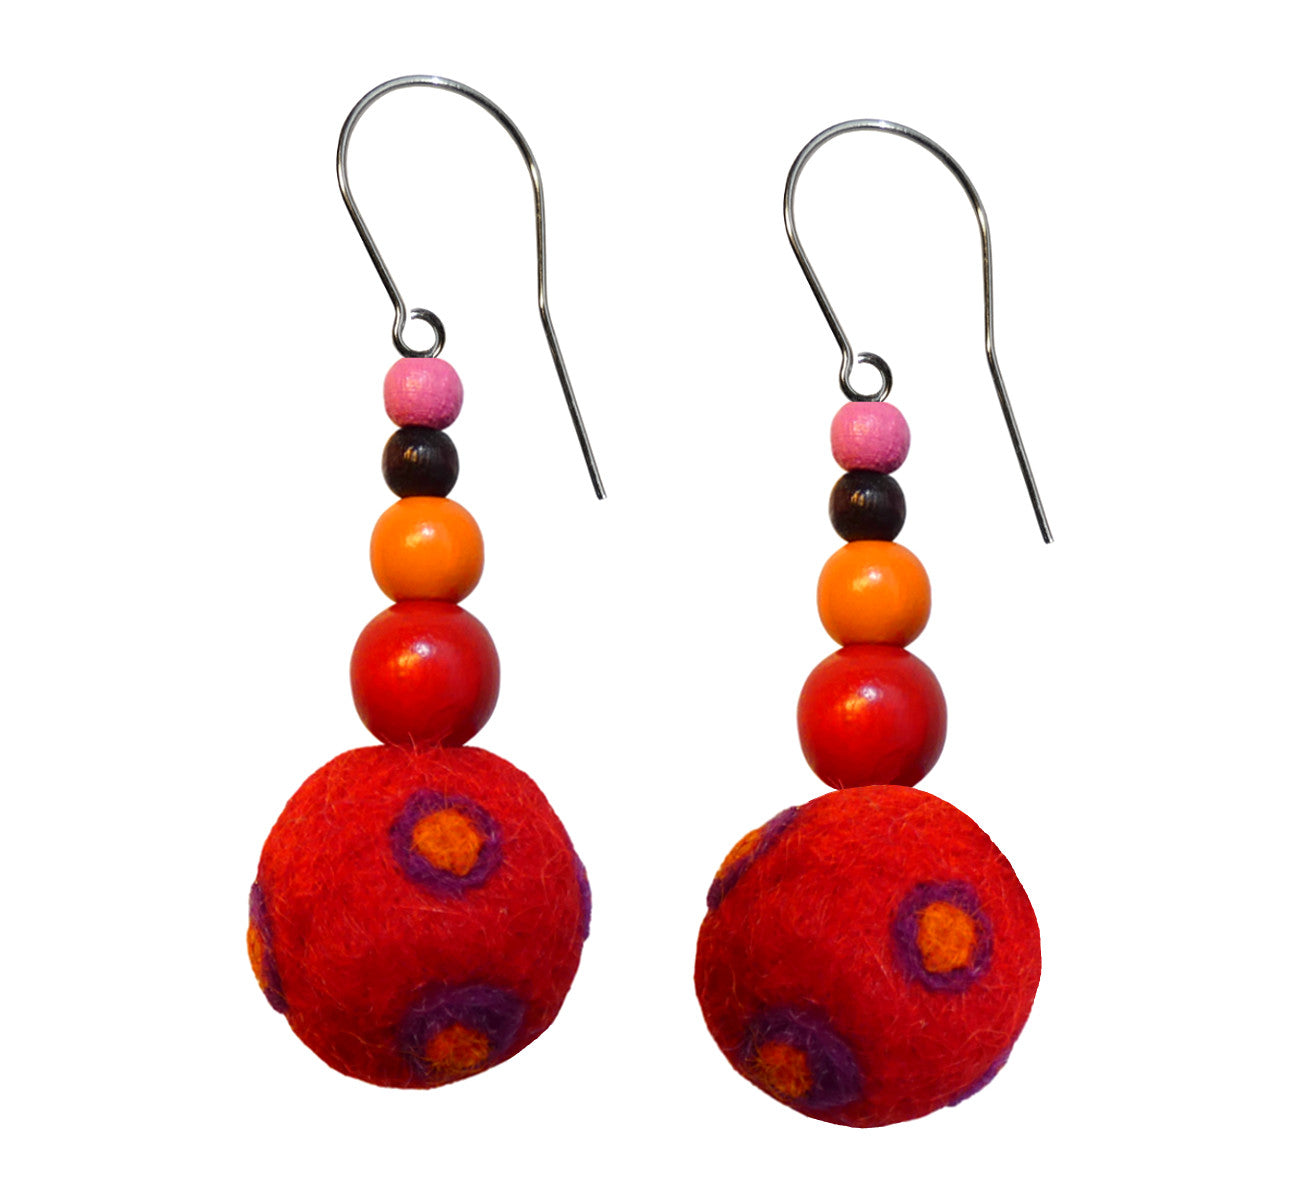 Wool felt ball, wood beads hook earrings, red with orange, length 4 cm 1.57", handmade.